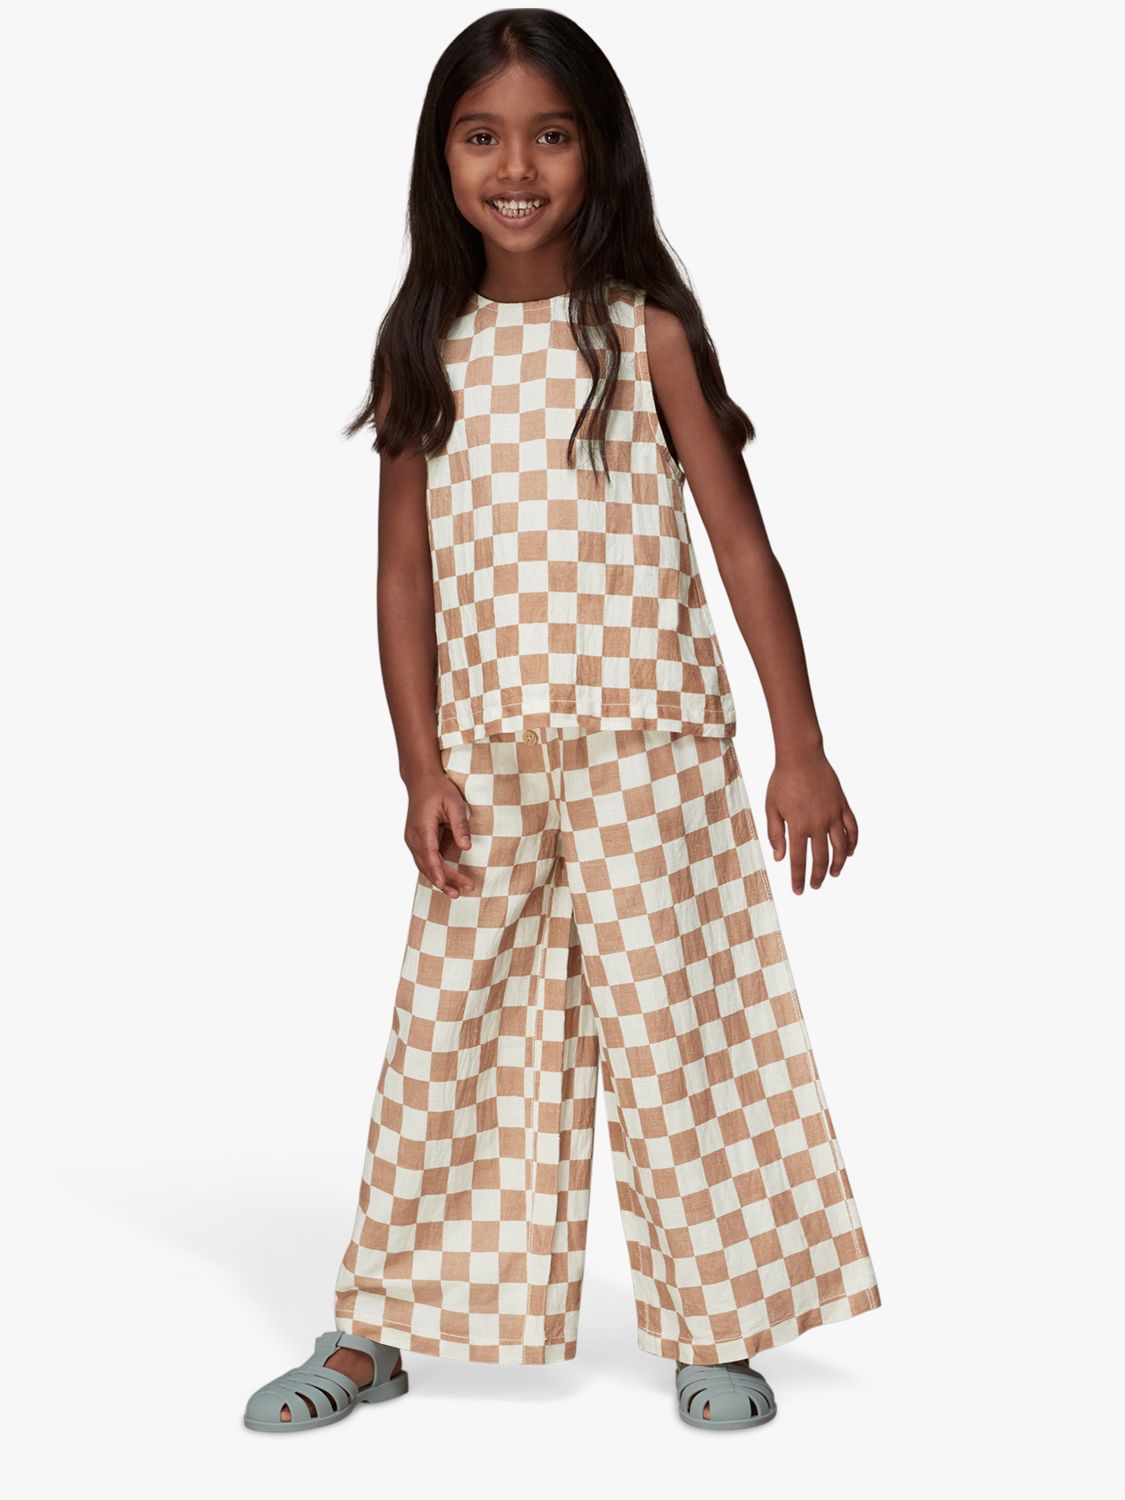 Whistles Kids' Linen Blend Checkerboard Sleeveless Top, Multi, 3-4 years